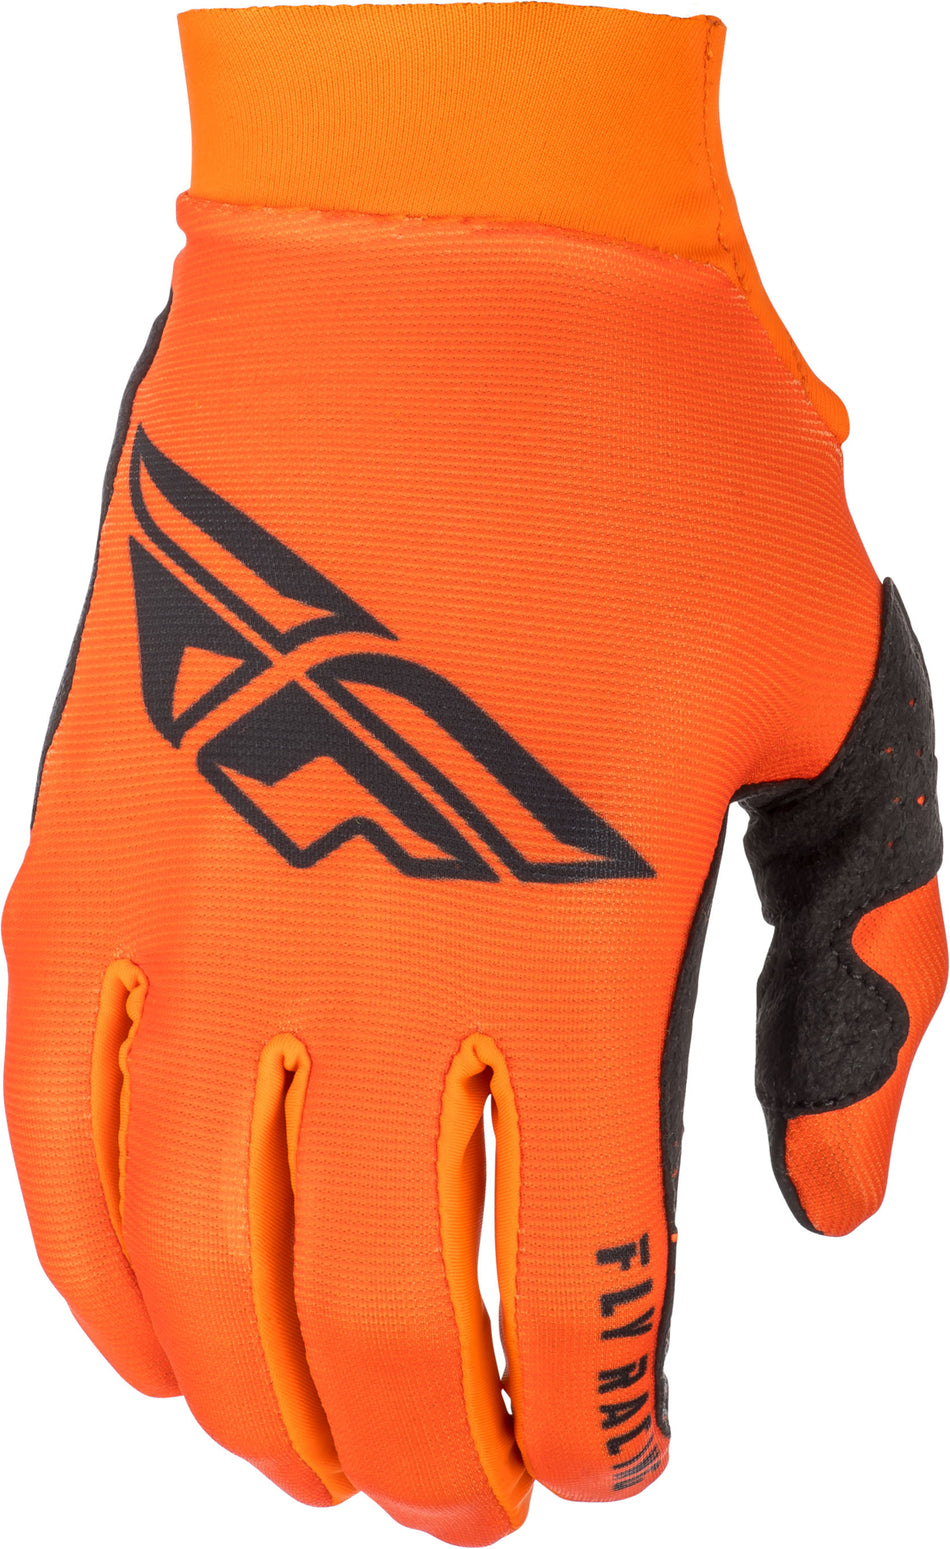 FLY RACING Pro Lite Gloves Orange/Black Sz 09 372-81709